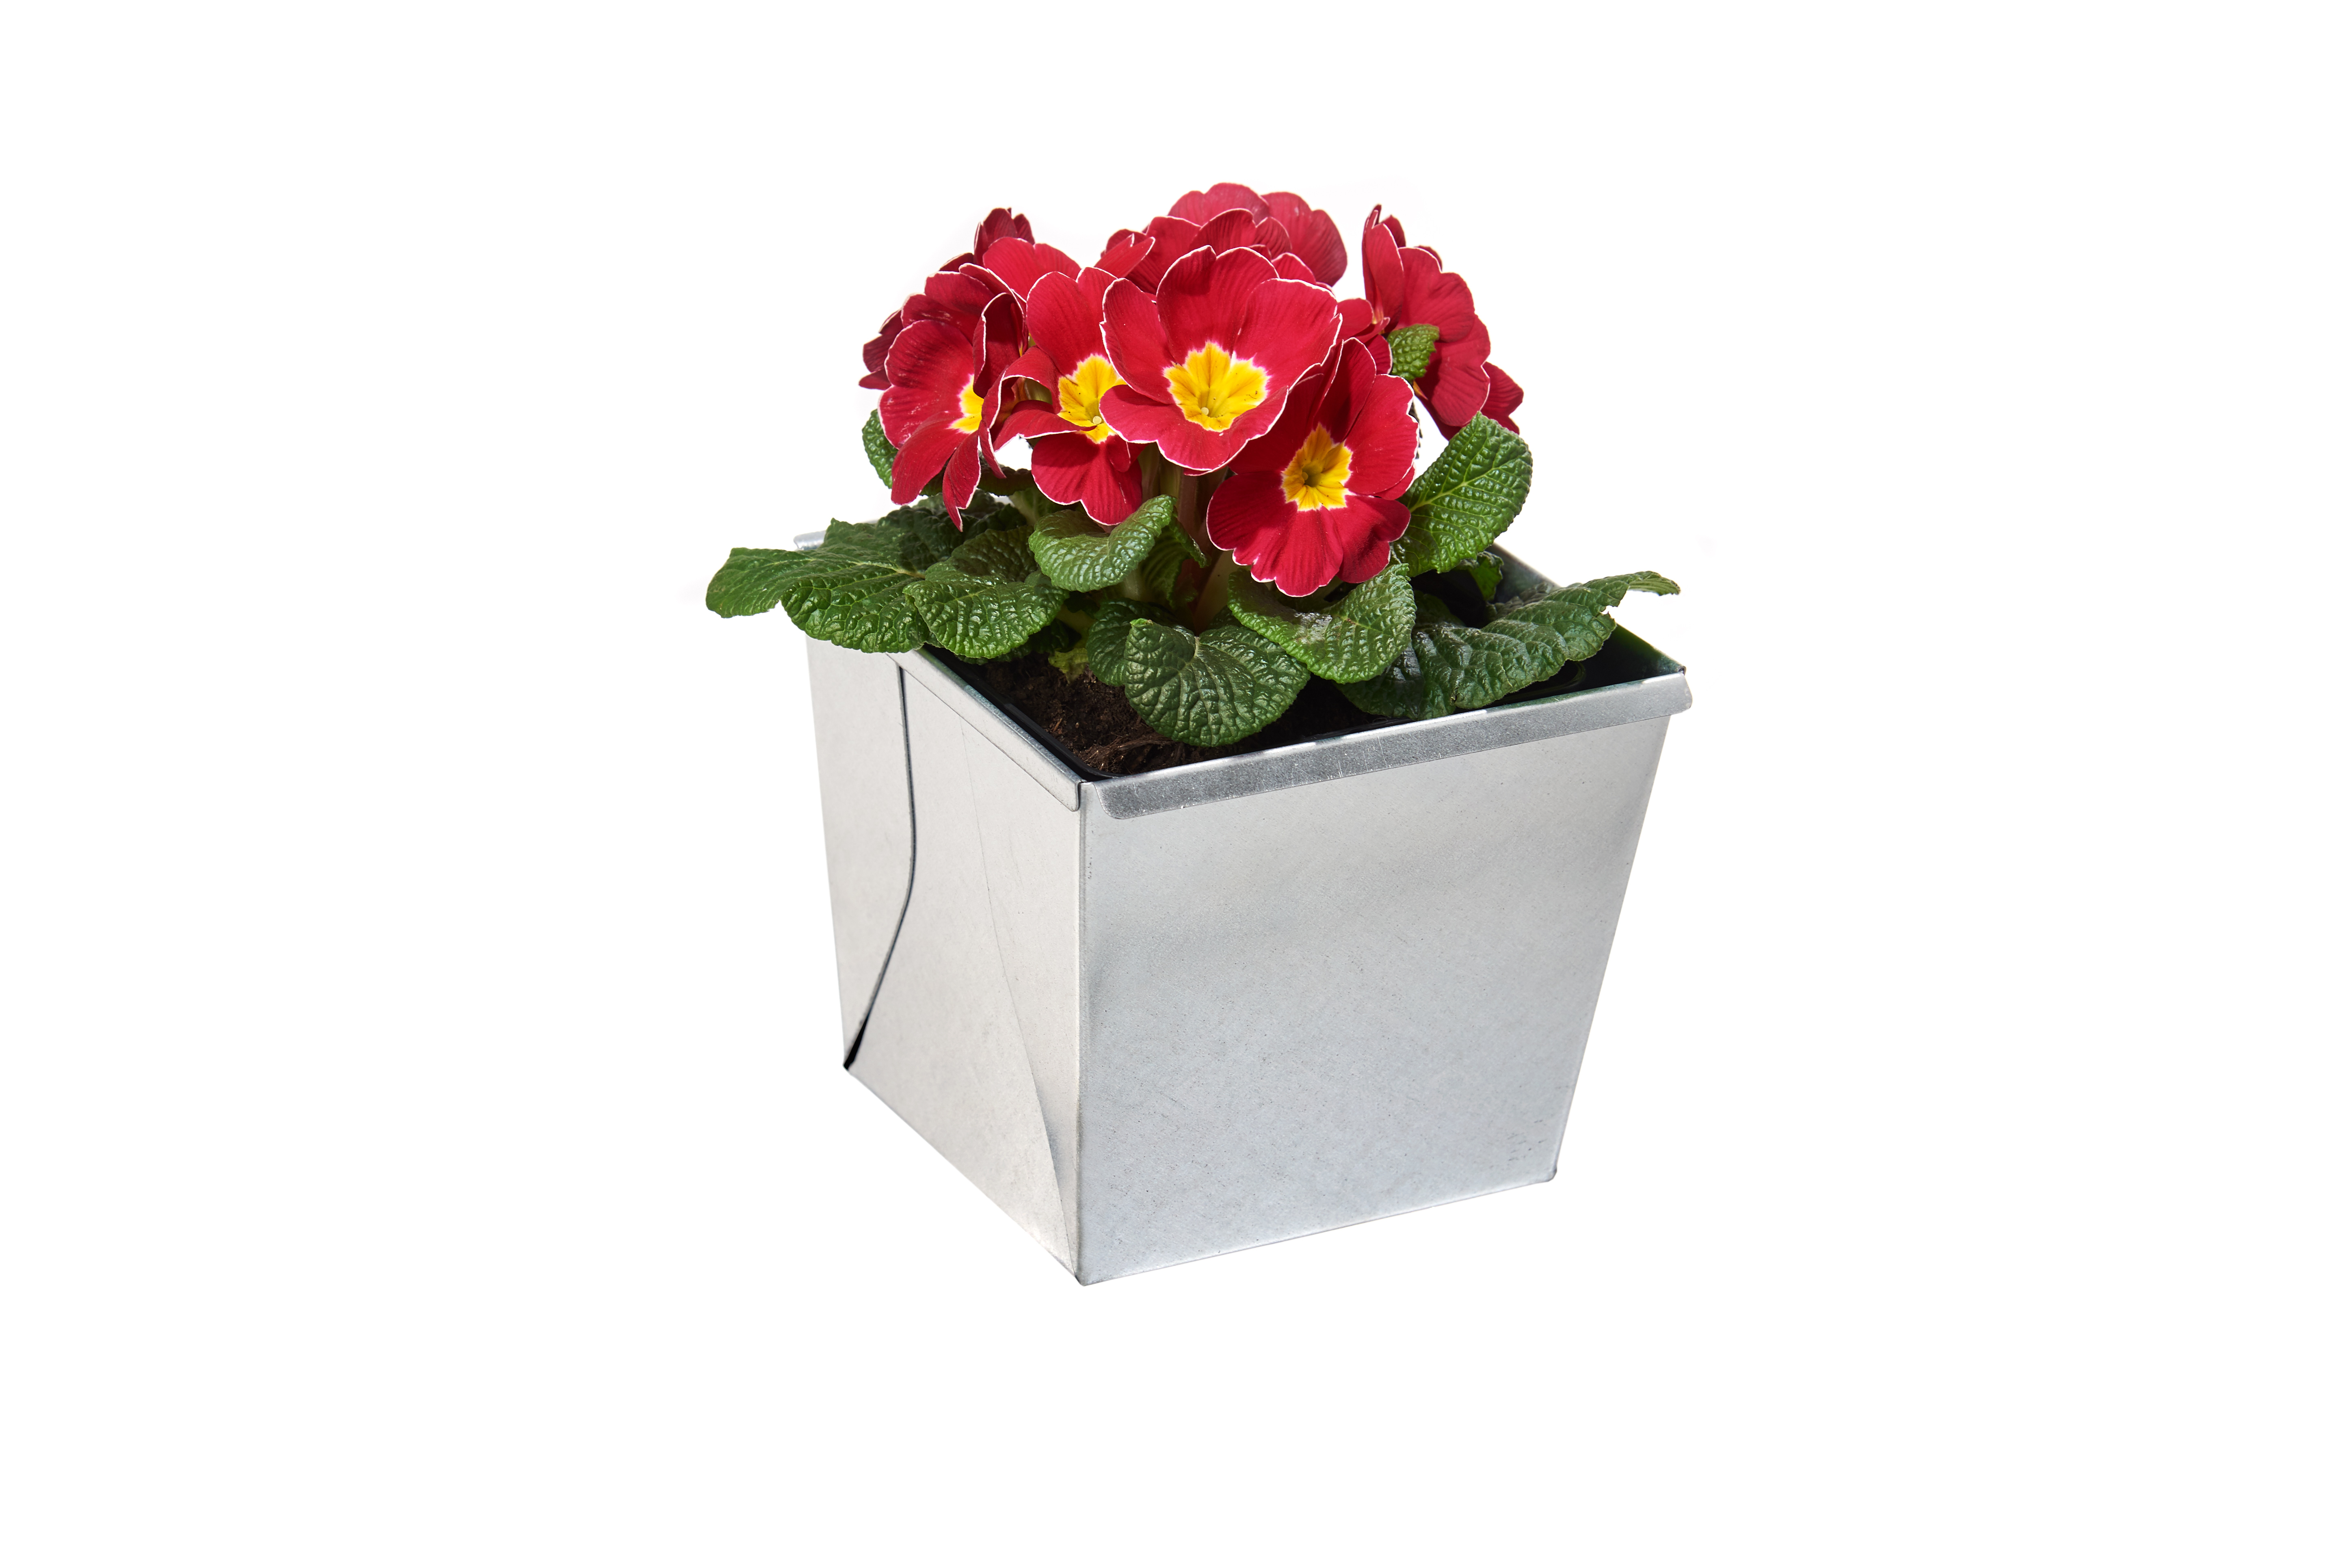 B-Ware: gabioka flowerbox small verzinkt 